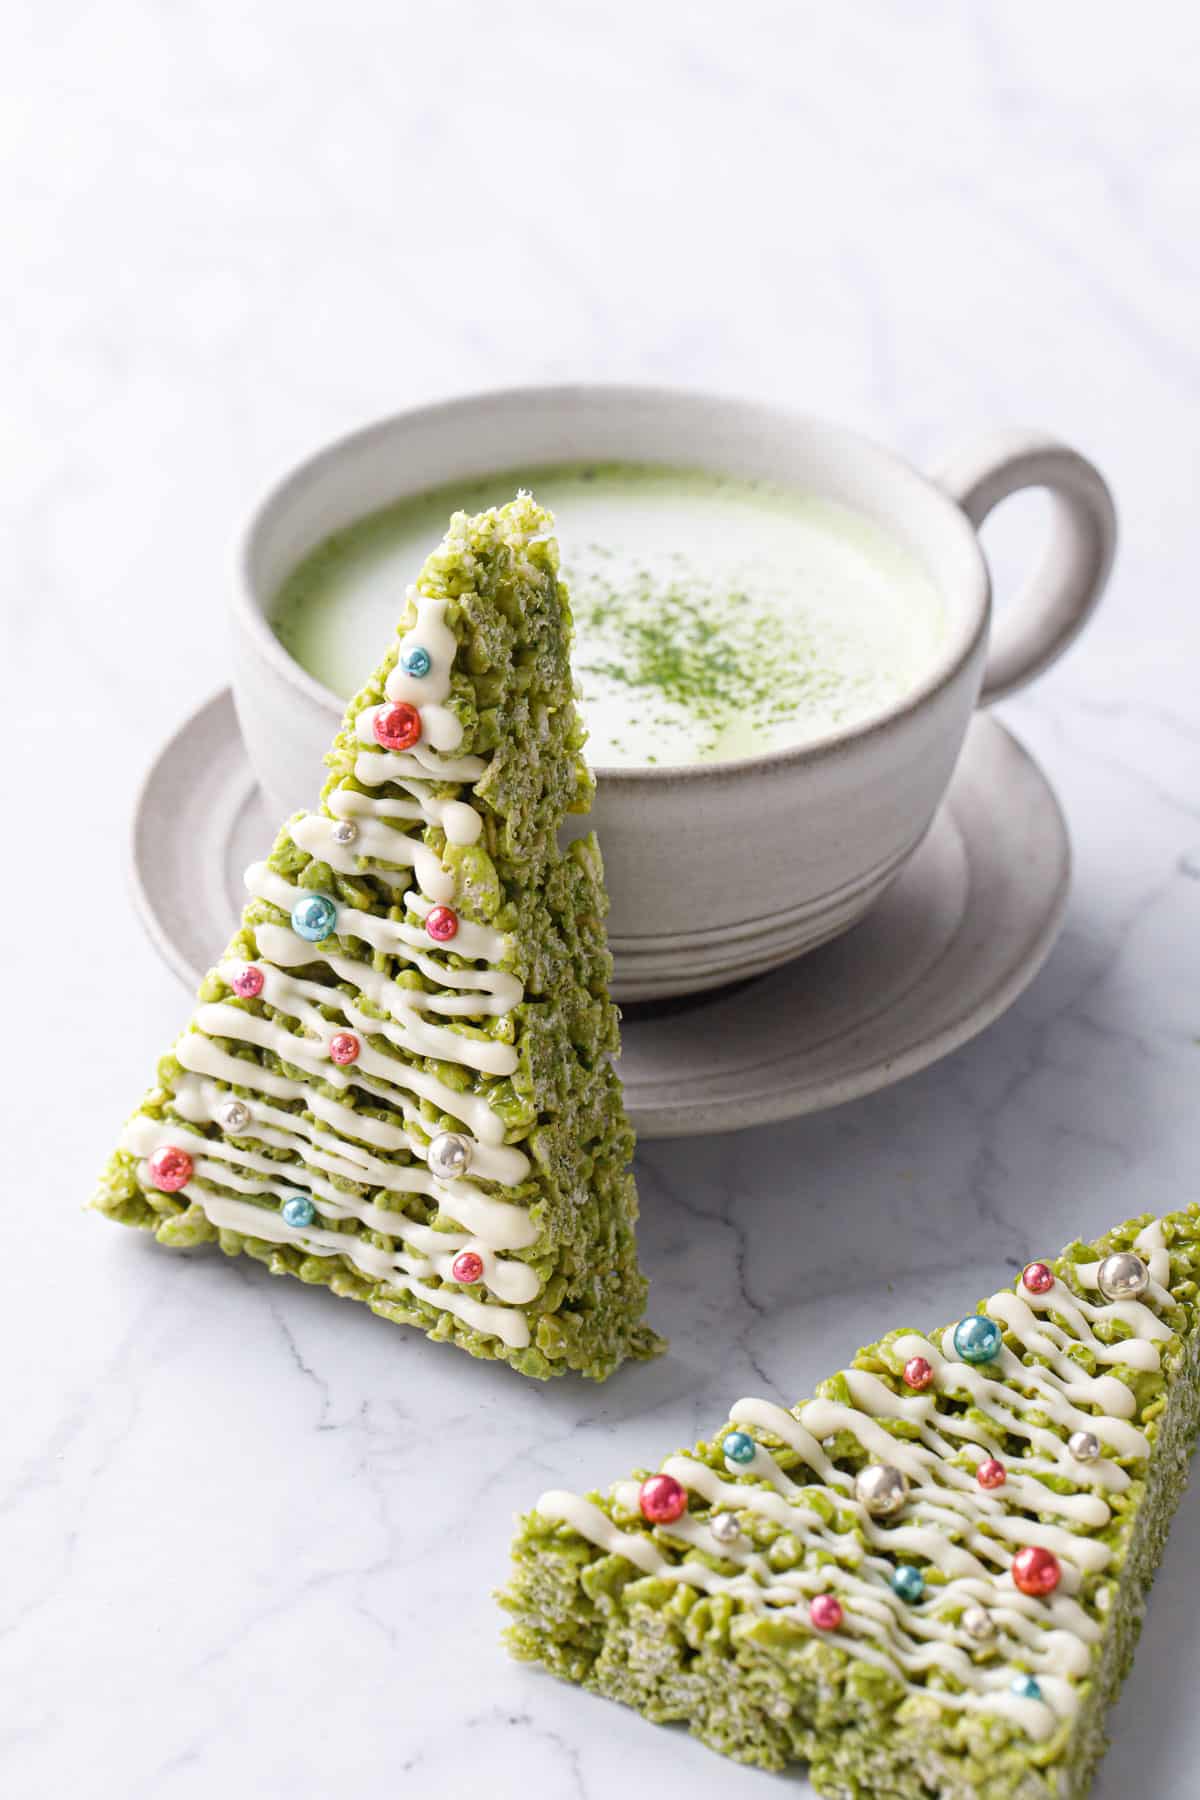 Matcha Rice Crispy Treats cut into a triangle and decorated like a Christmas tree, leaning up against a matcha latte.